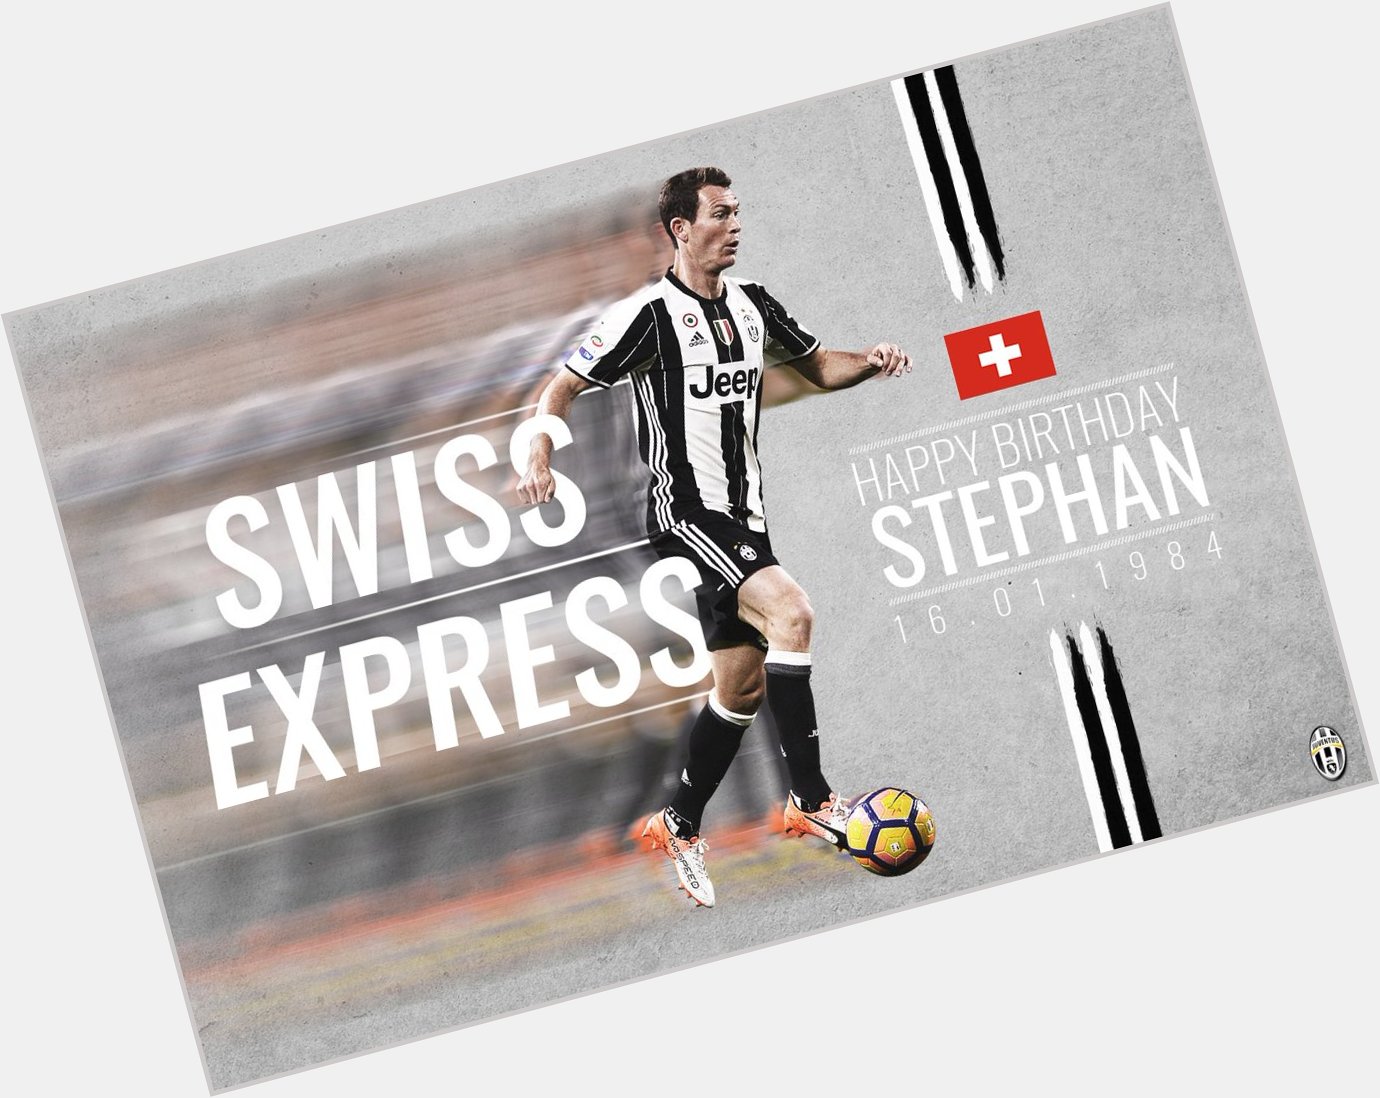 Event:Happy birthday, Stephan!: Stephan Lichtsteiner celebrates his 33rd birthday today!  